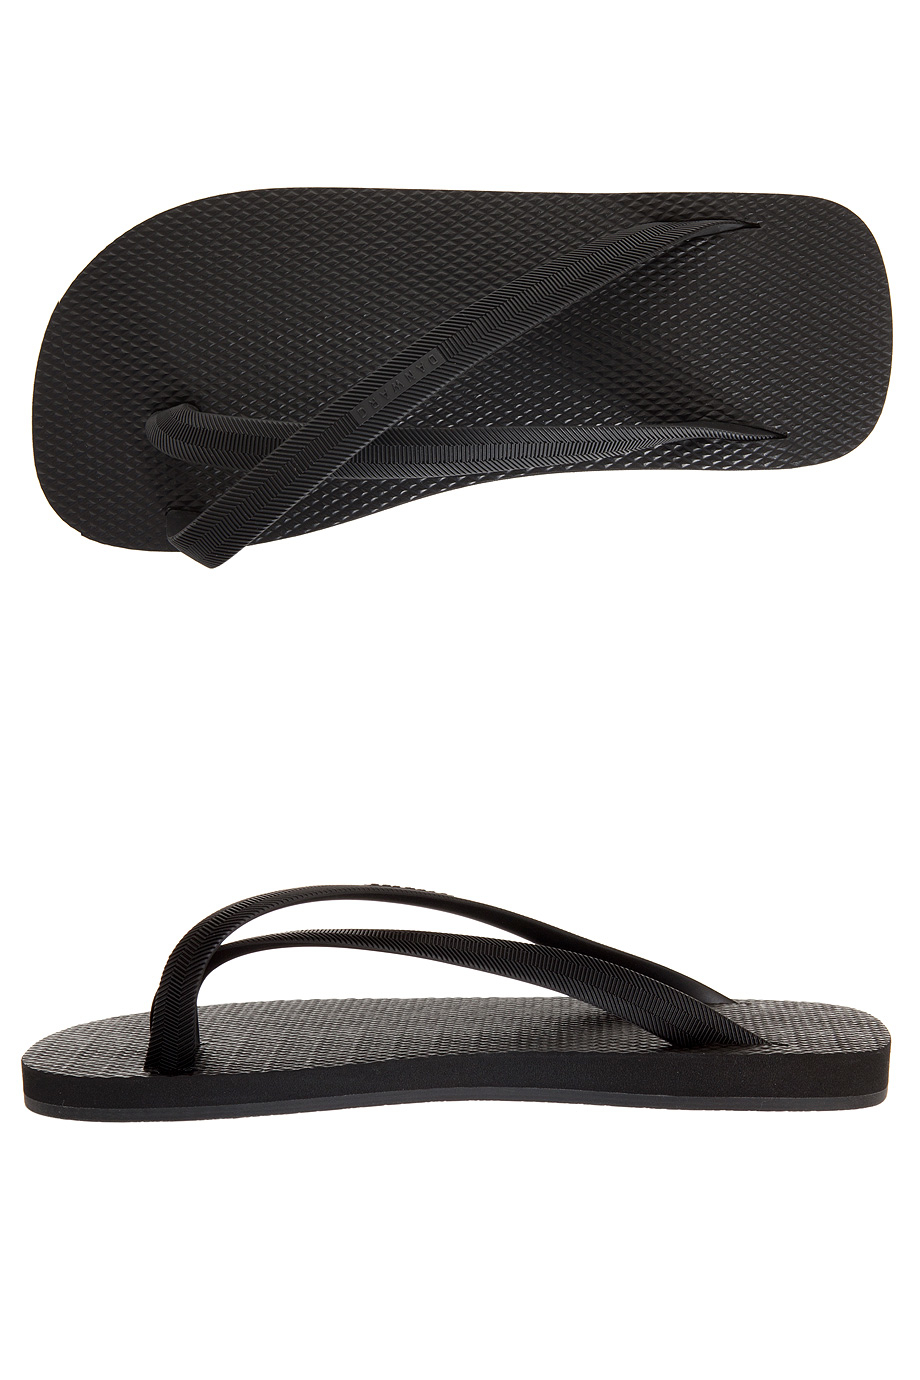 Danward Men's Cross-Toe Flip Flop Sandals S13FWF01 $78 NEW | eBay